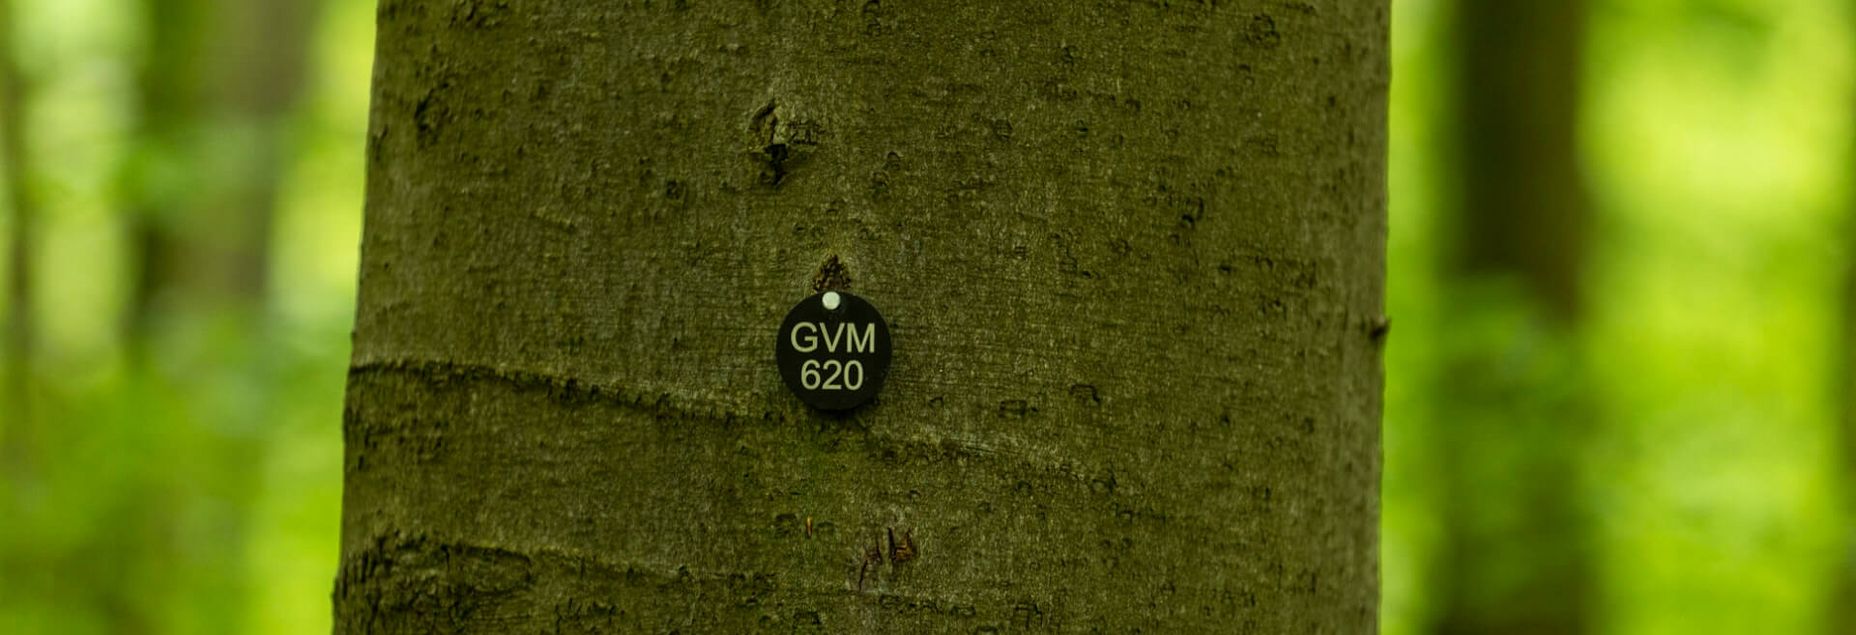 Baum GVM 620 - Plakette